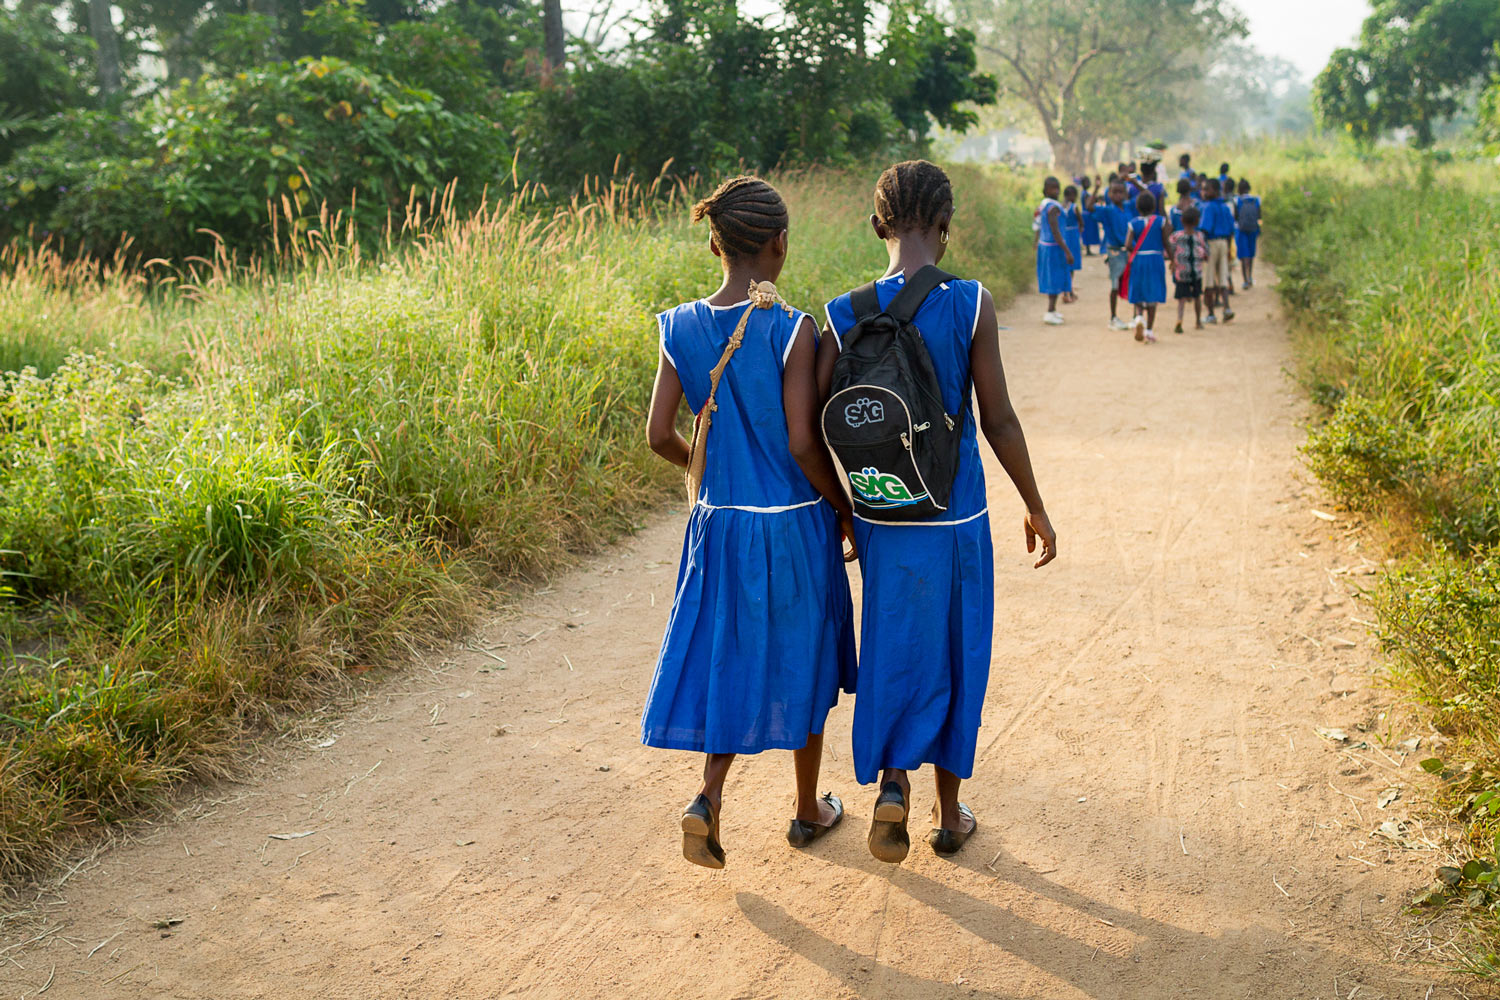  OPEN THIS PUBLICATION  UNICEF SIERRA LEONE: KUMBA'S STORY  